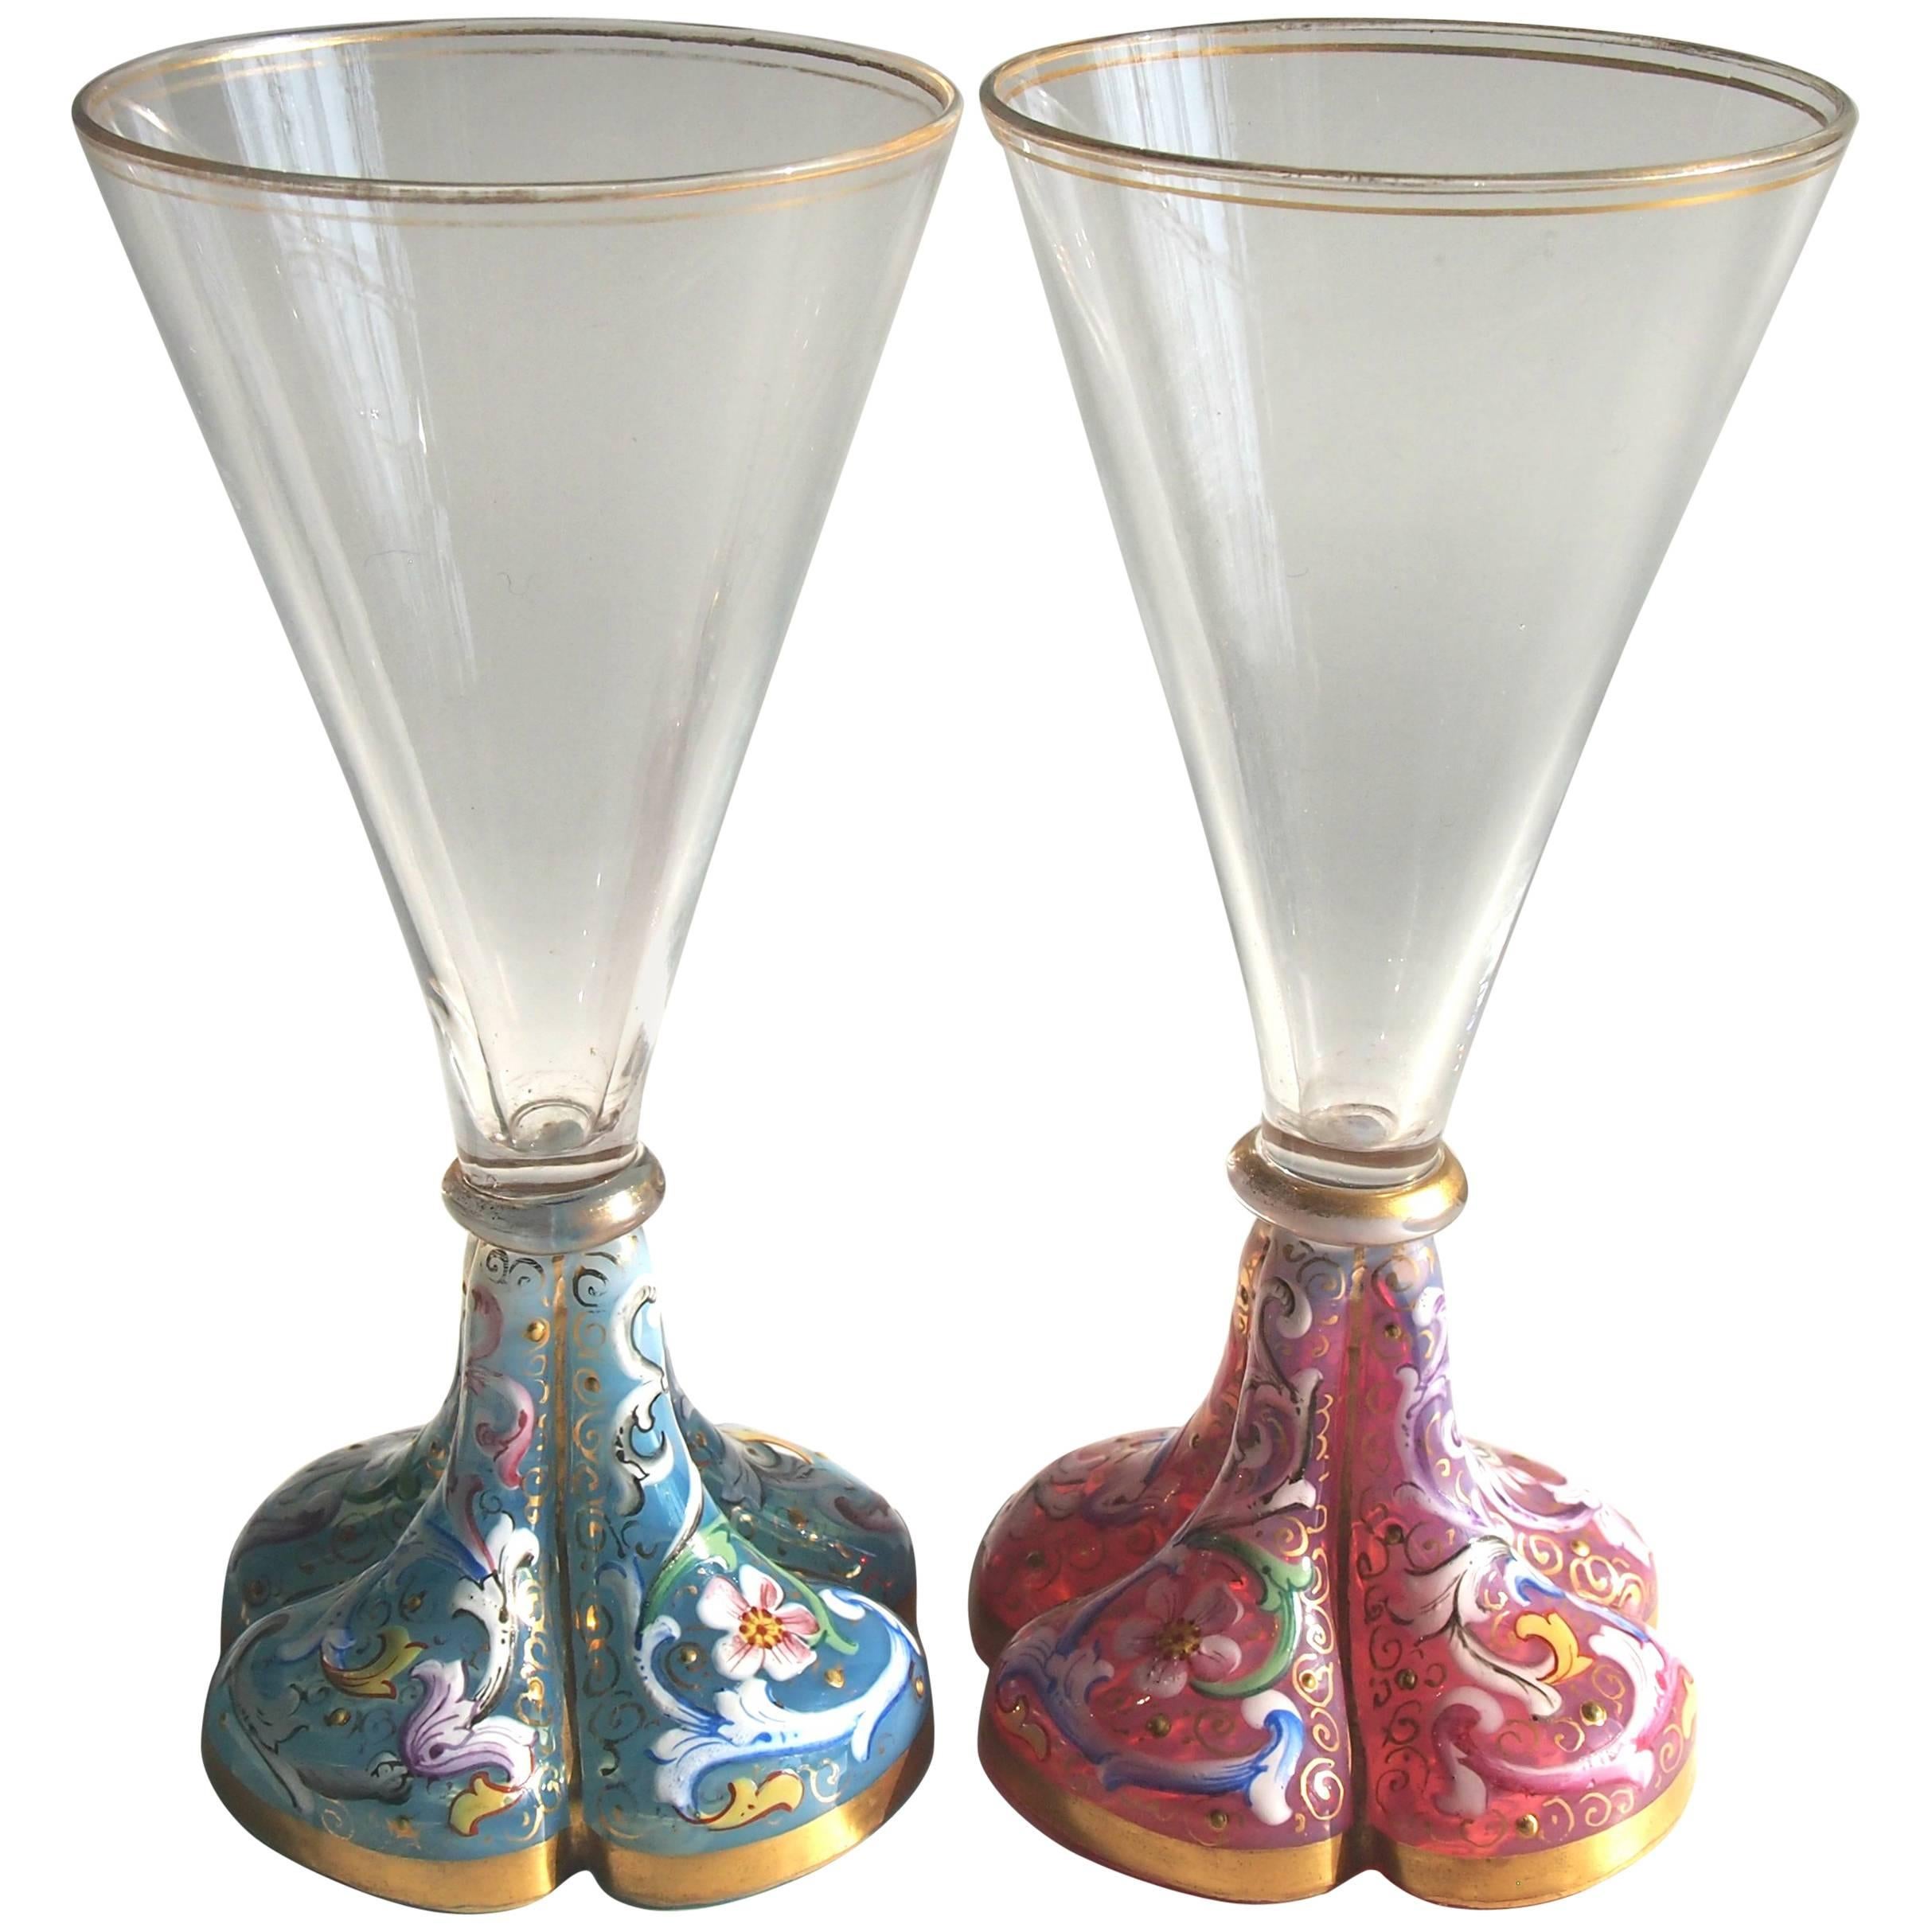 Moser Pair of Art Nouveau Pink and Blue Opal Liquor Glasses